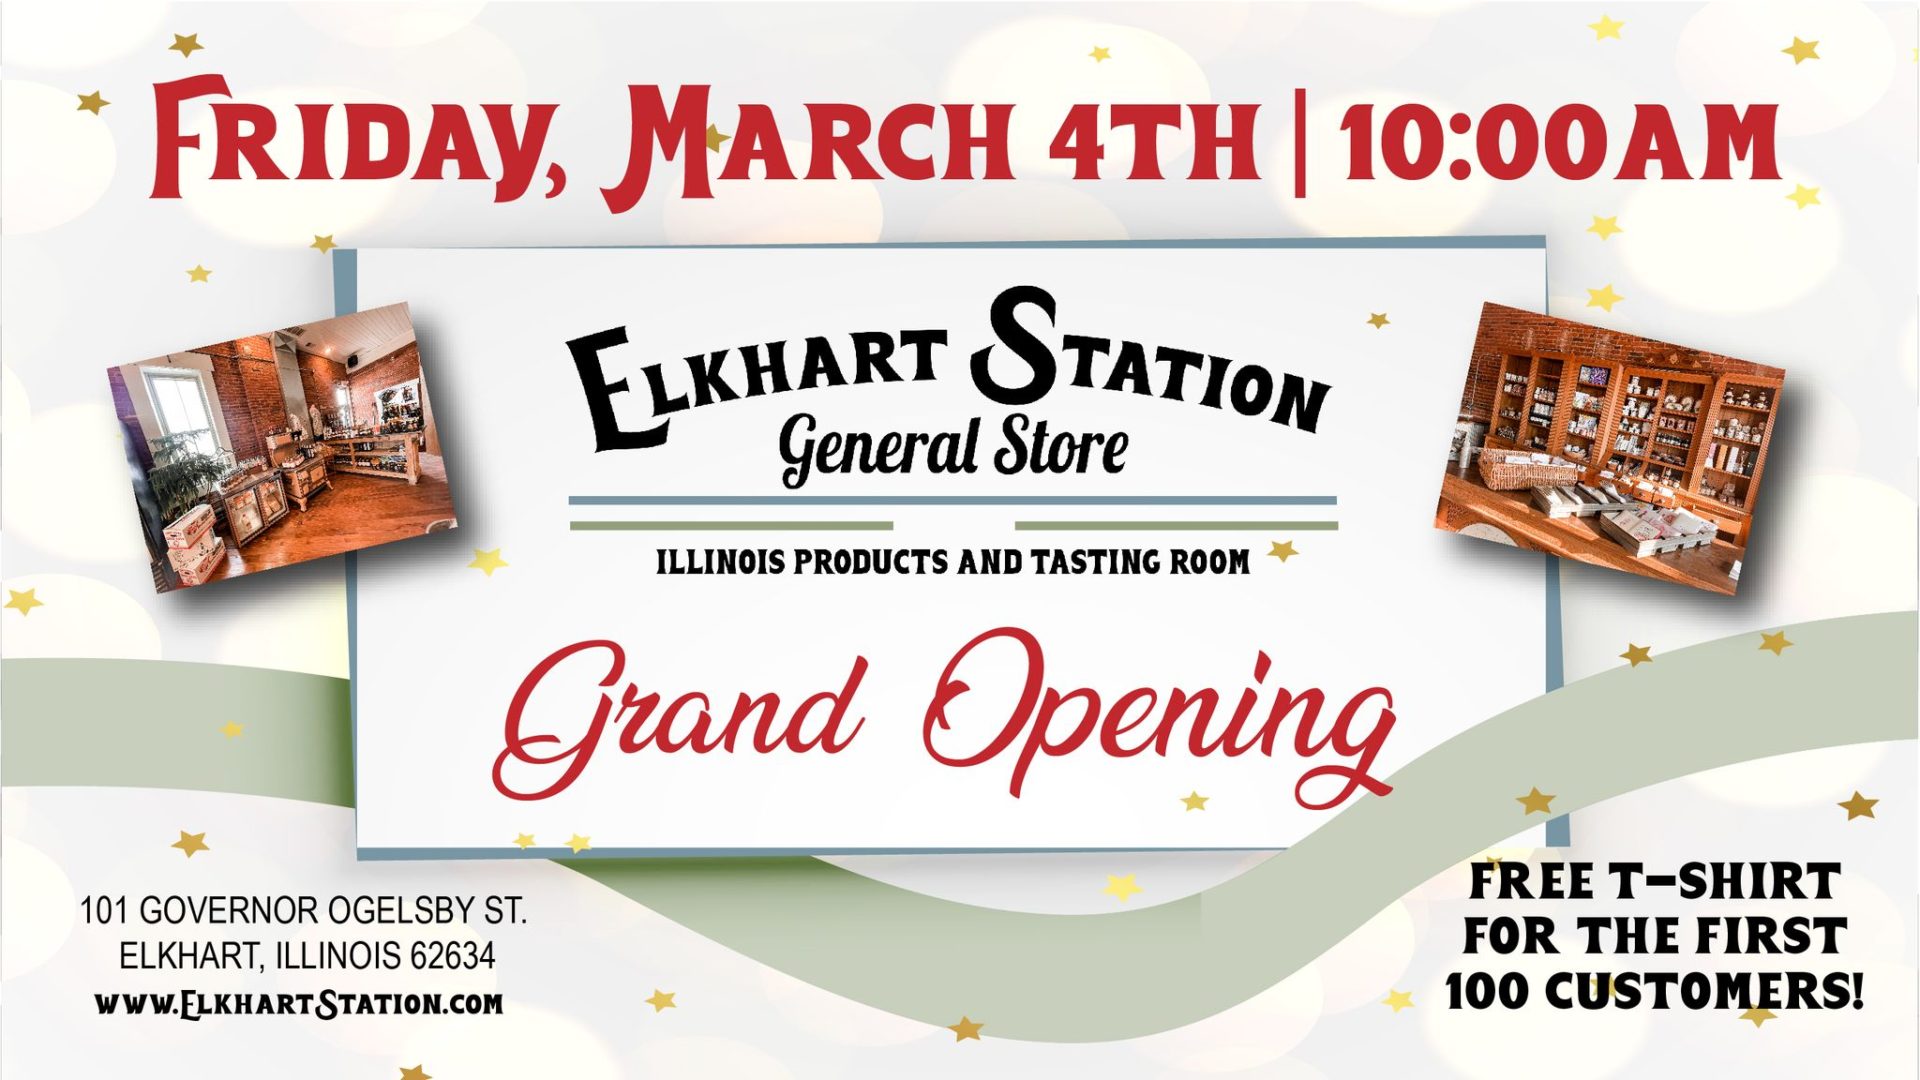 Elkhart Station General Store